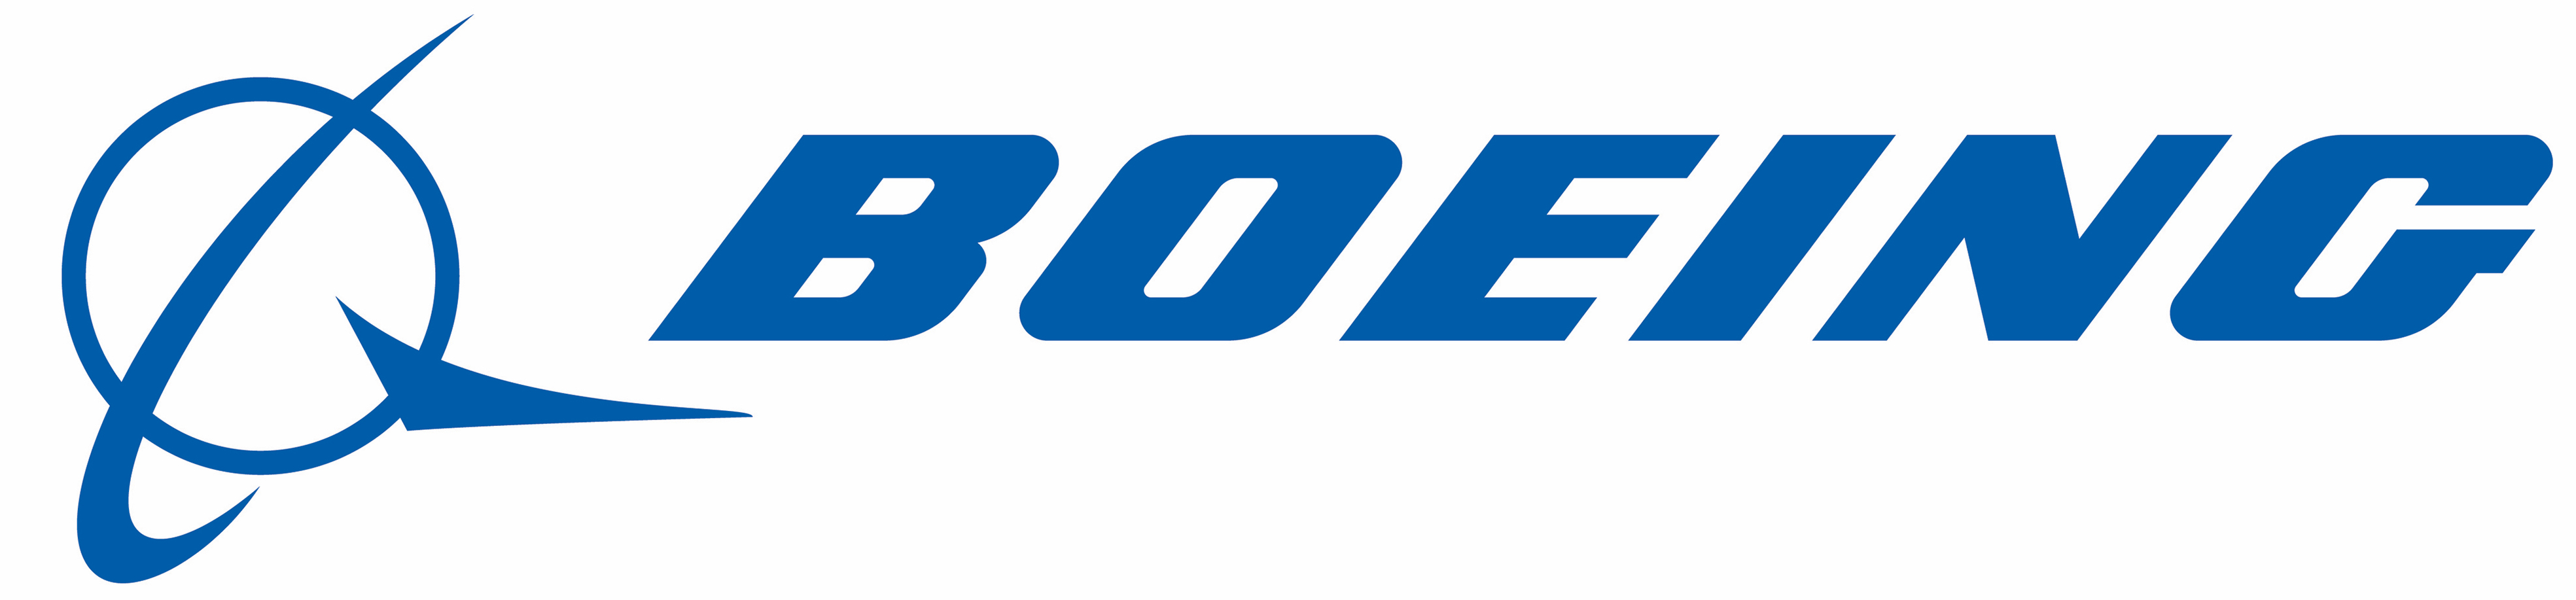 The Boeing company logo.